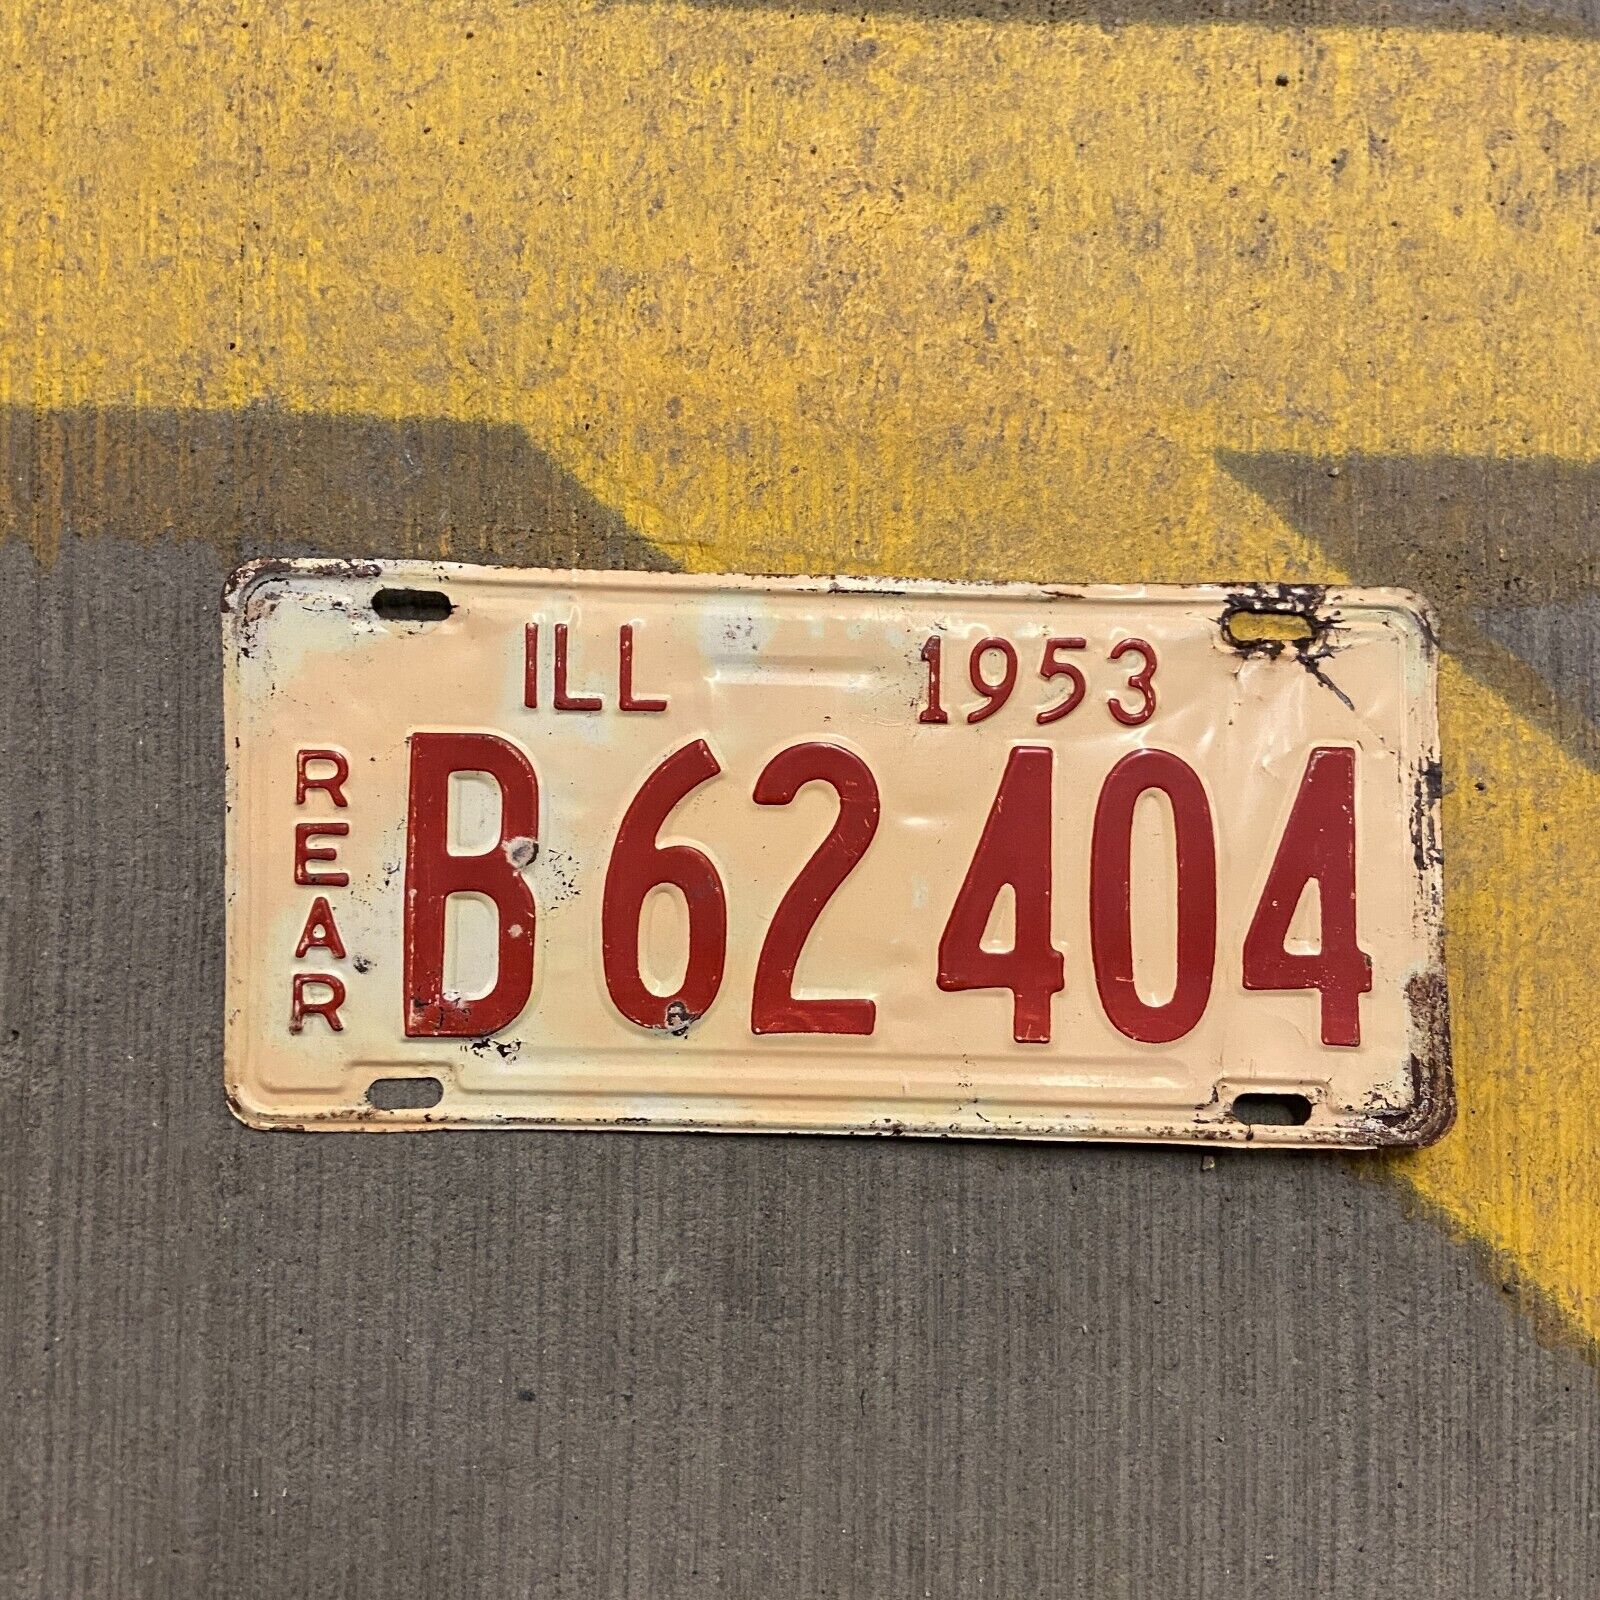 1953 Illinois B Truck License Plate B 62404 Garage Auto Car Show 404